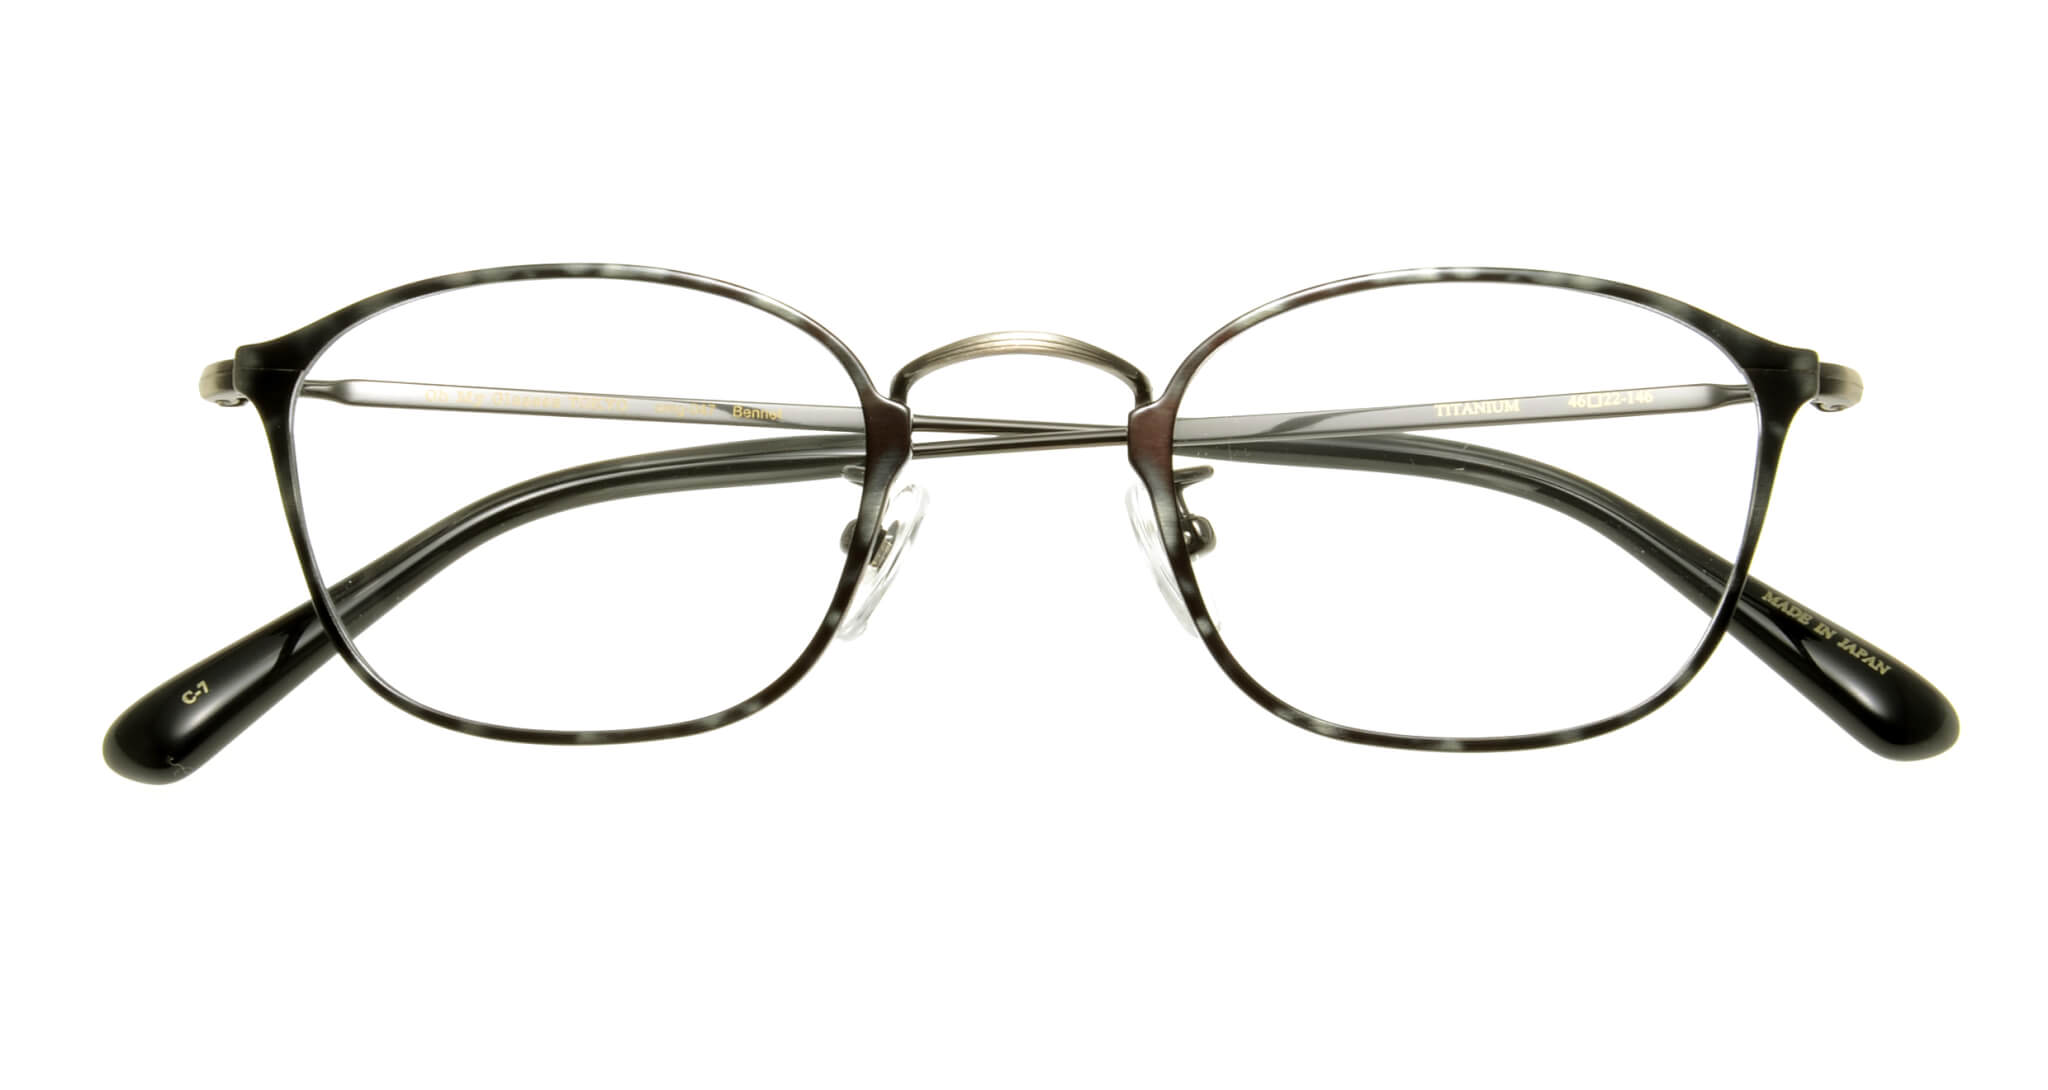 oh-my-glasses-tokyo-%e3%83%98%e3%82%99%e3%83%8d%e3%83%83%e3%83%88-omg-047-7-46